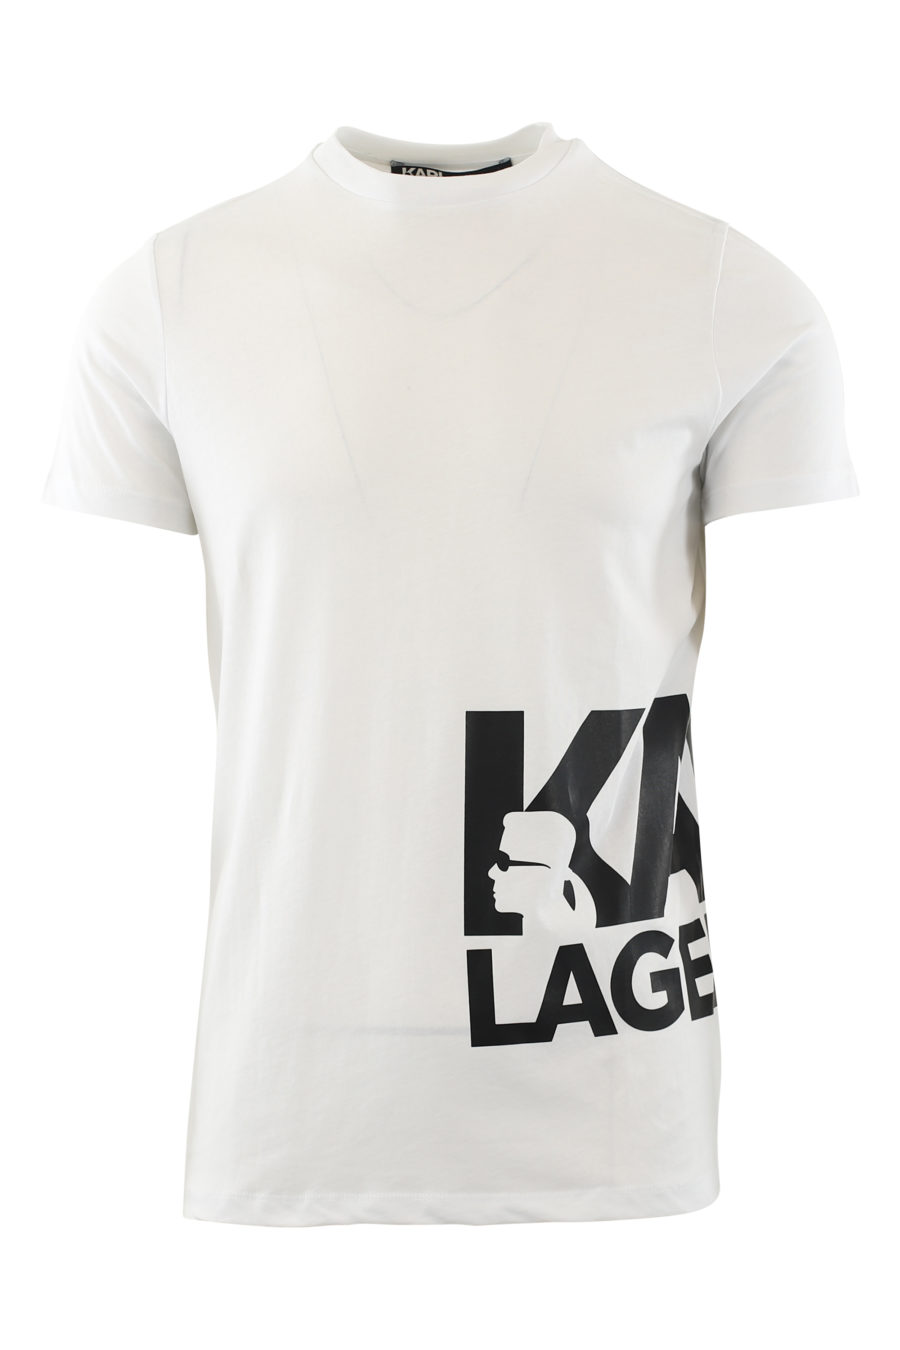 Camiseta blanca con logo negro grande lateral - IMG 6513